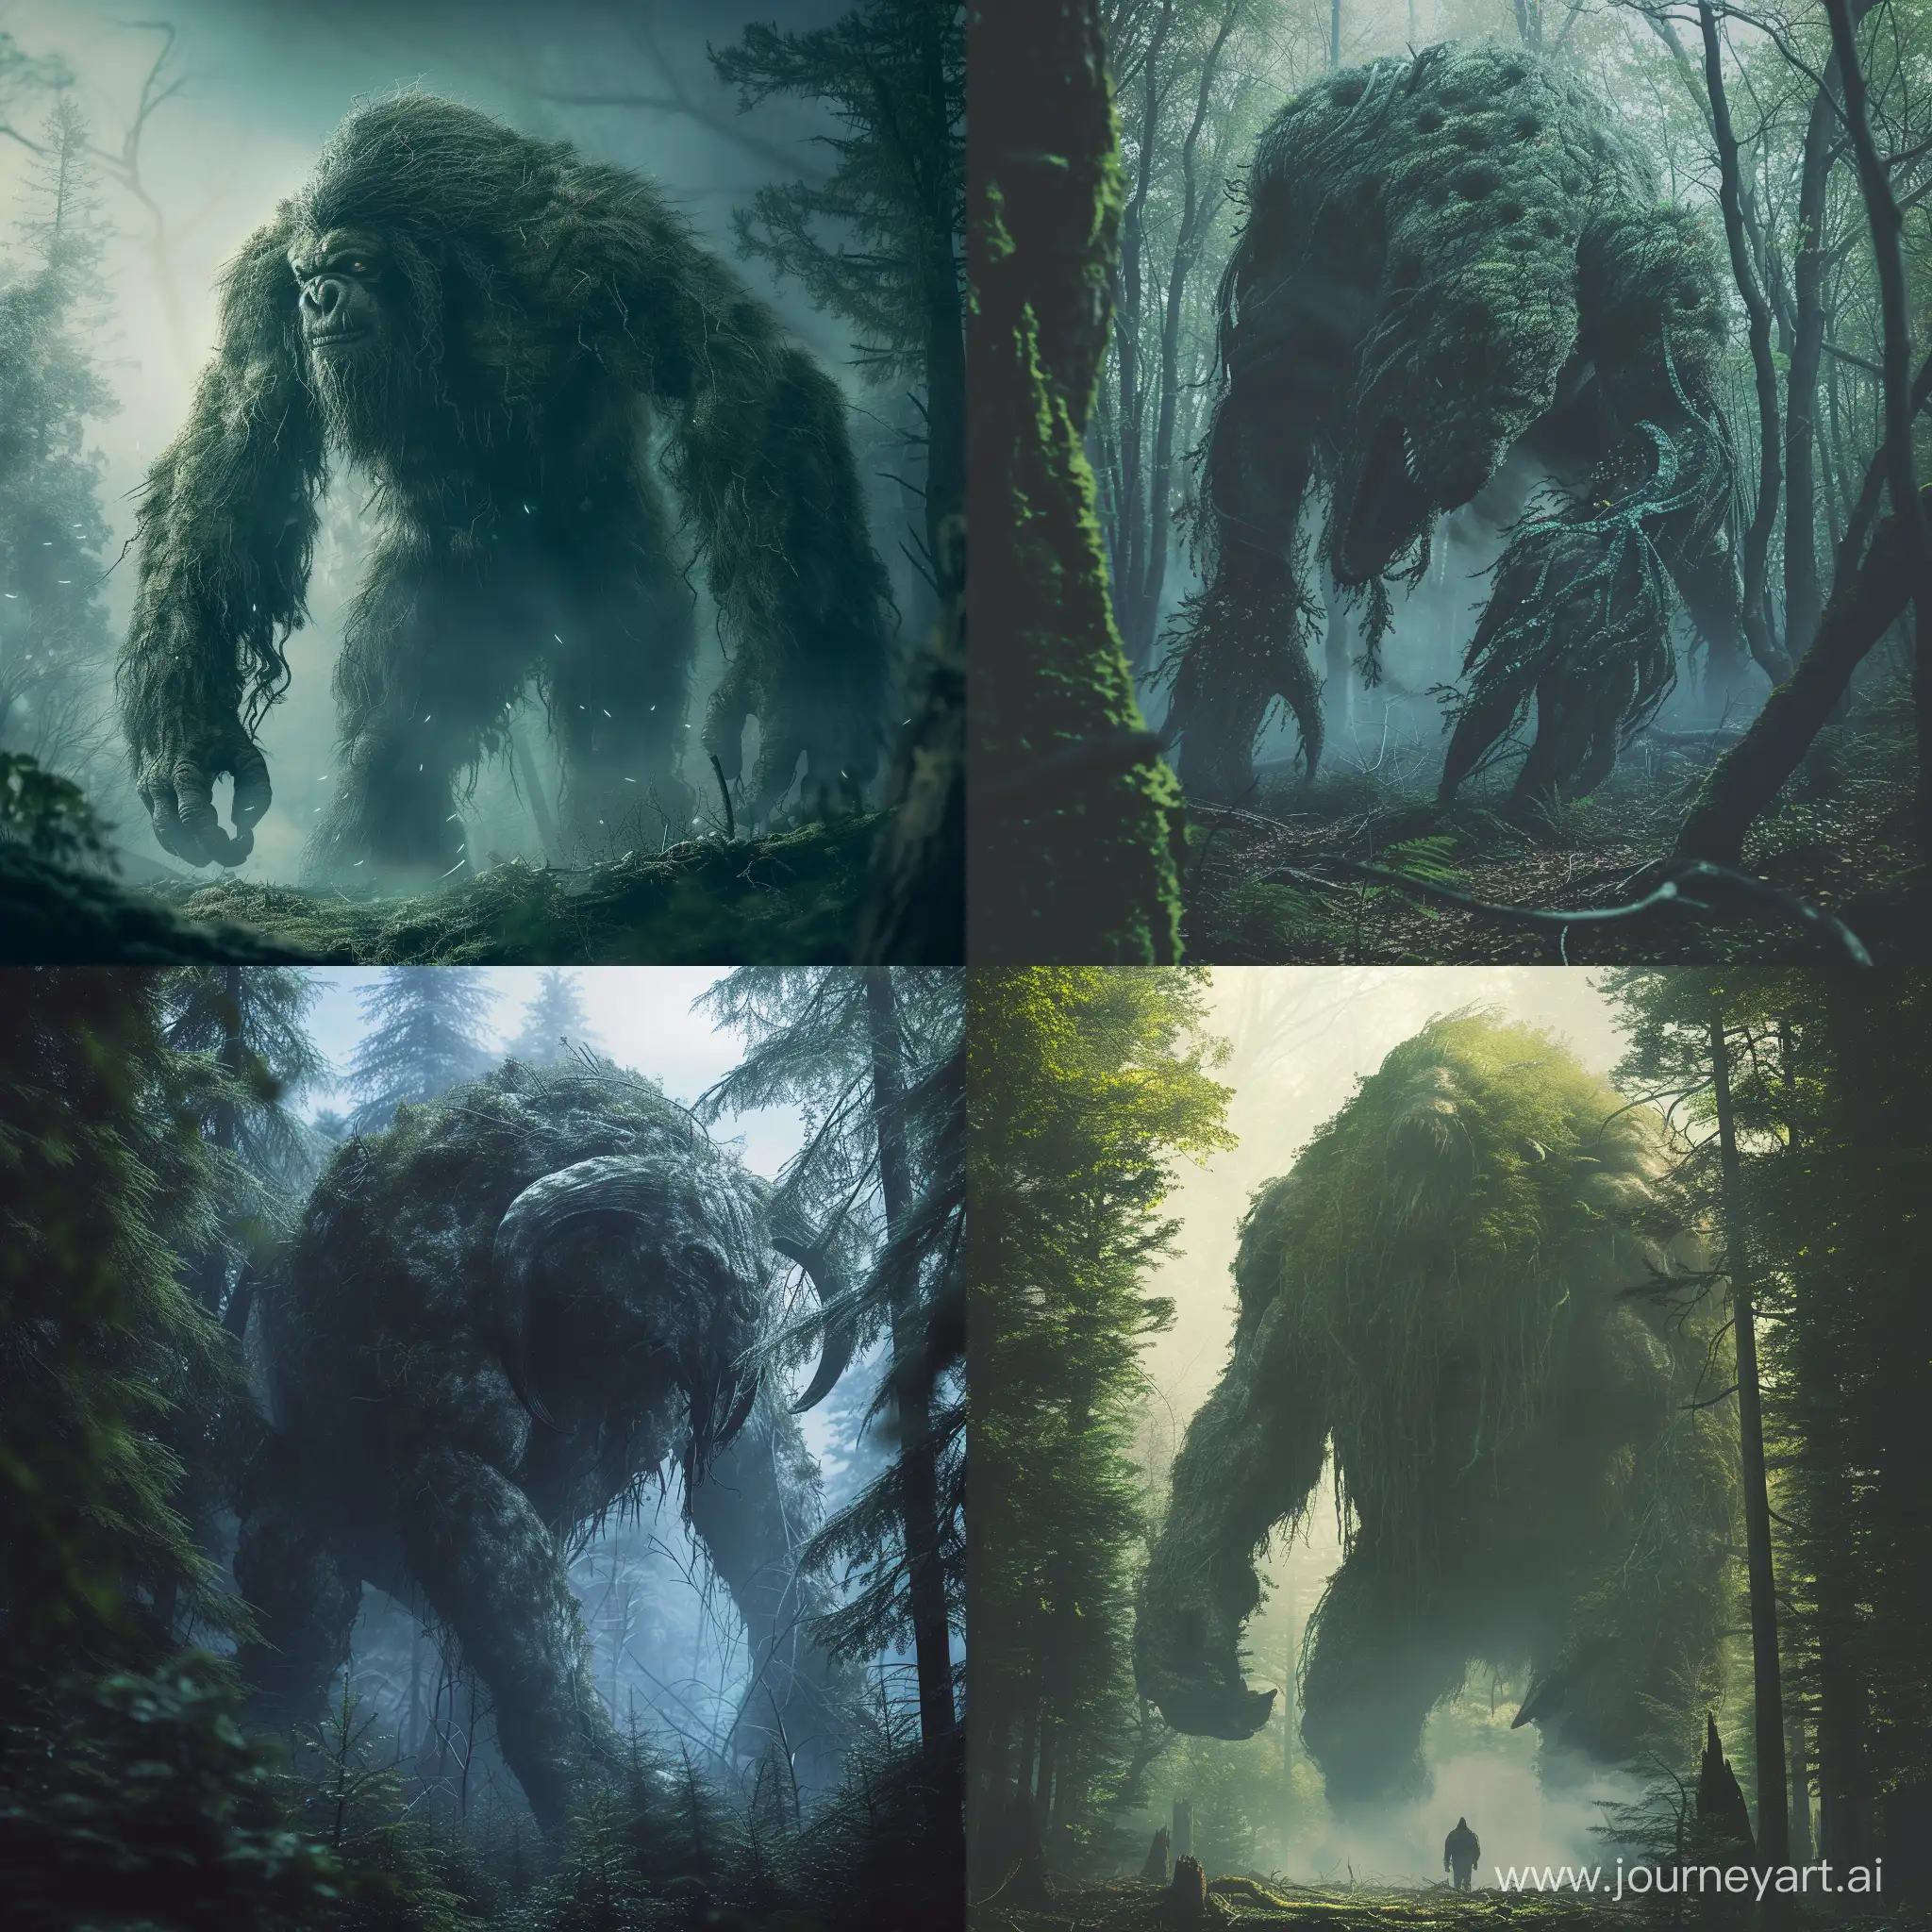 sebuah foto realistis, makhluk mitologi kuno yang hidup di pelosok hutan, tubuh besar seperti raksasa, hutan lebat yang dingin